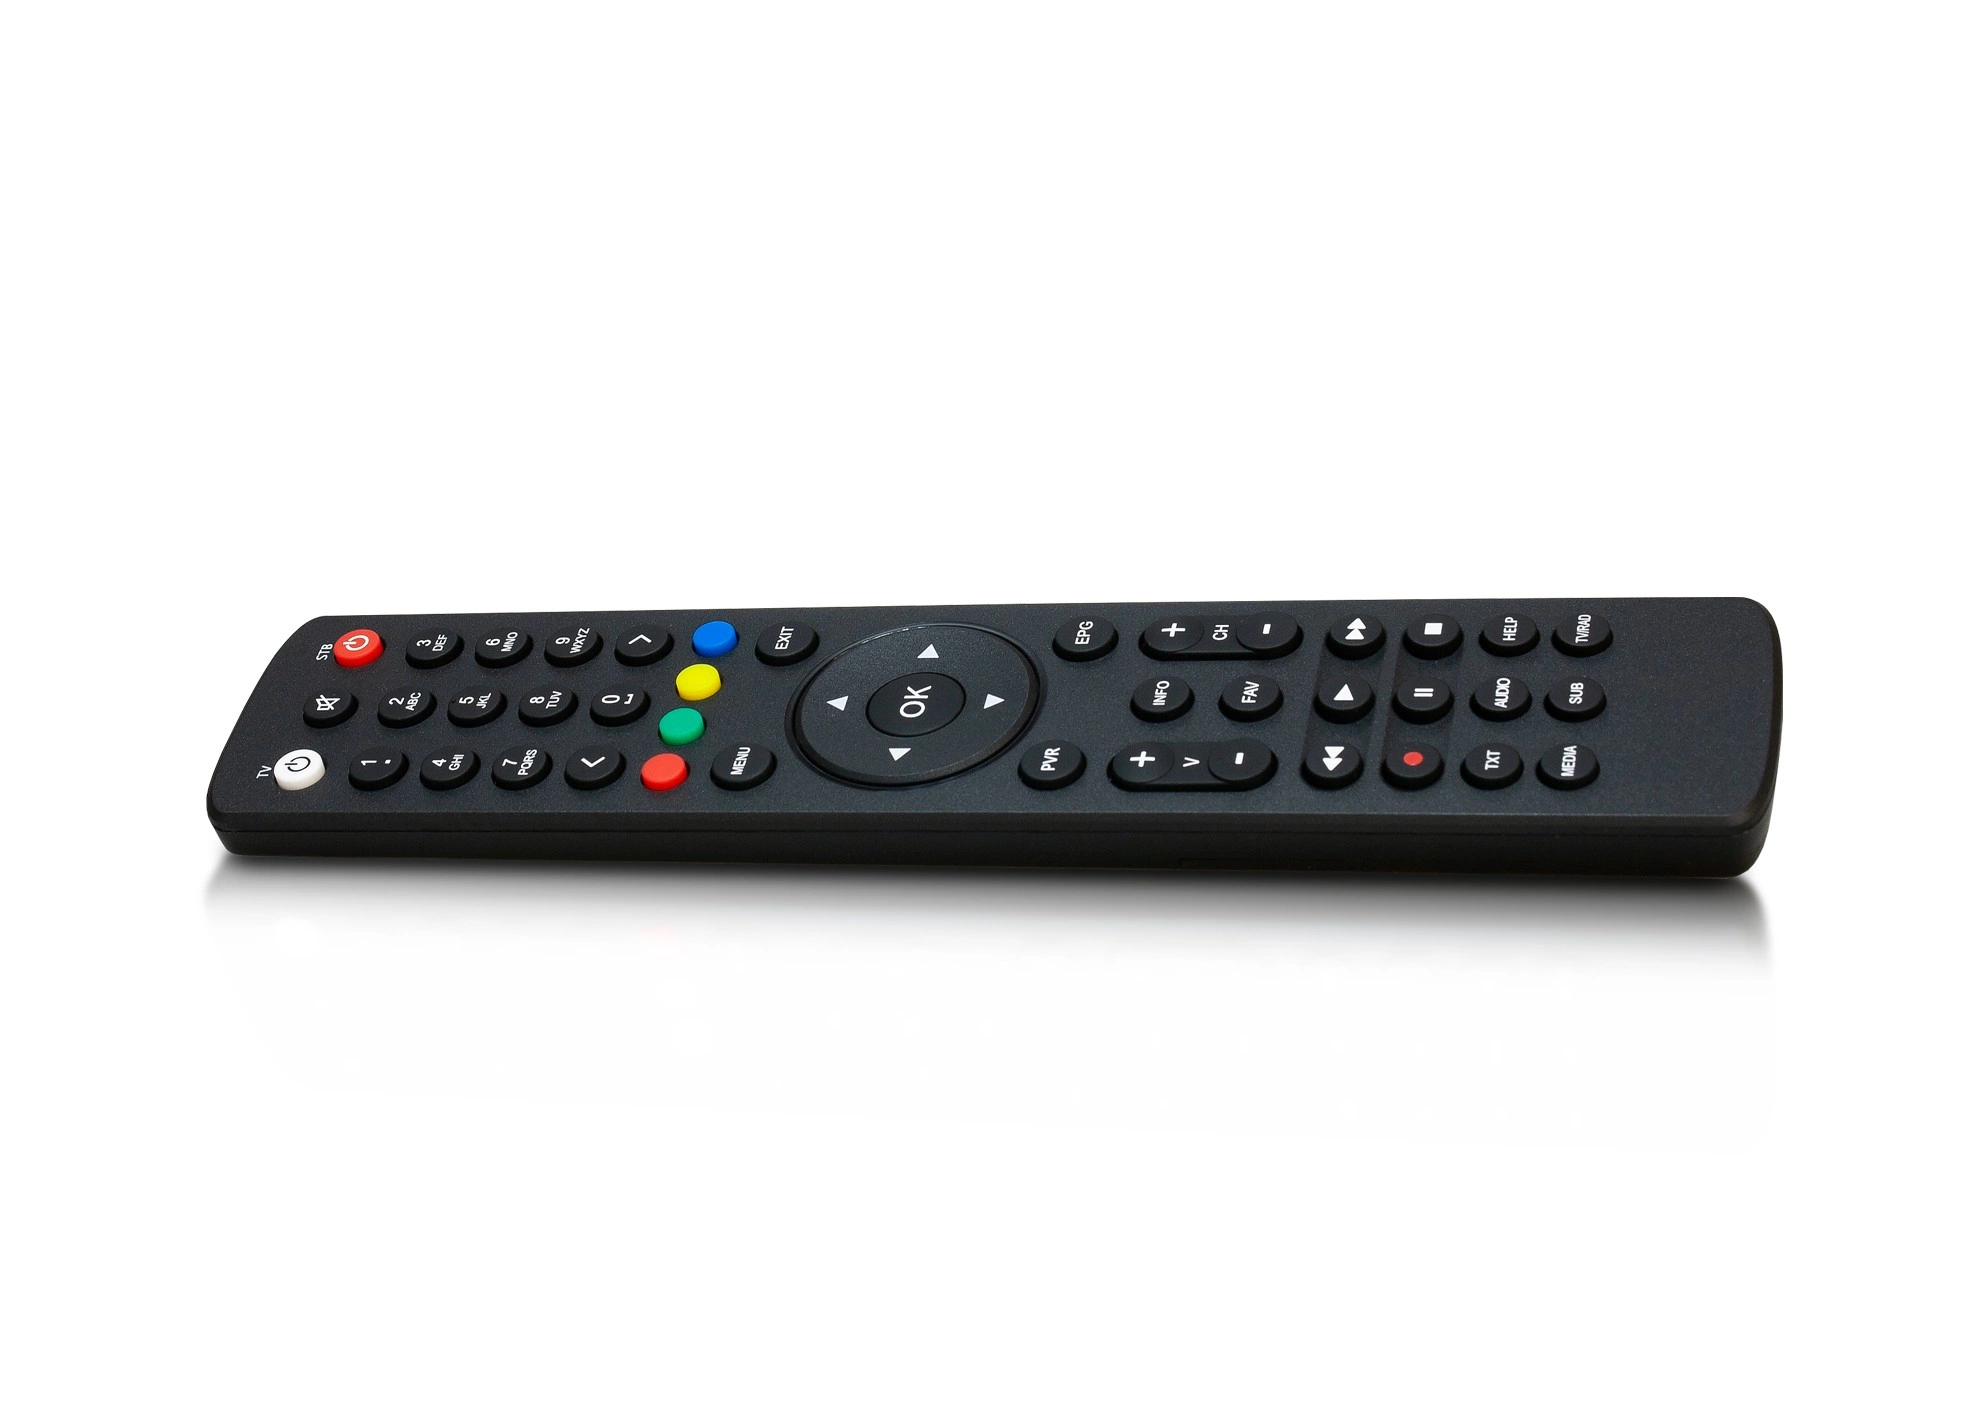 AB ALLTV remote control (AB CryptoBox and PULSe)